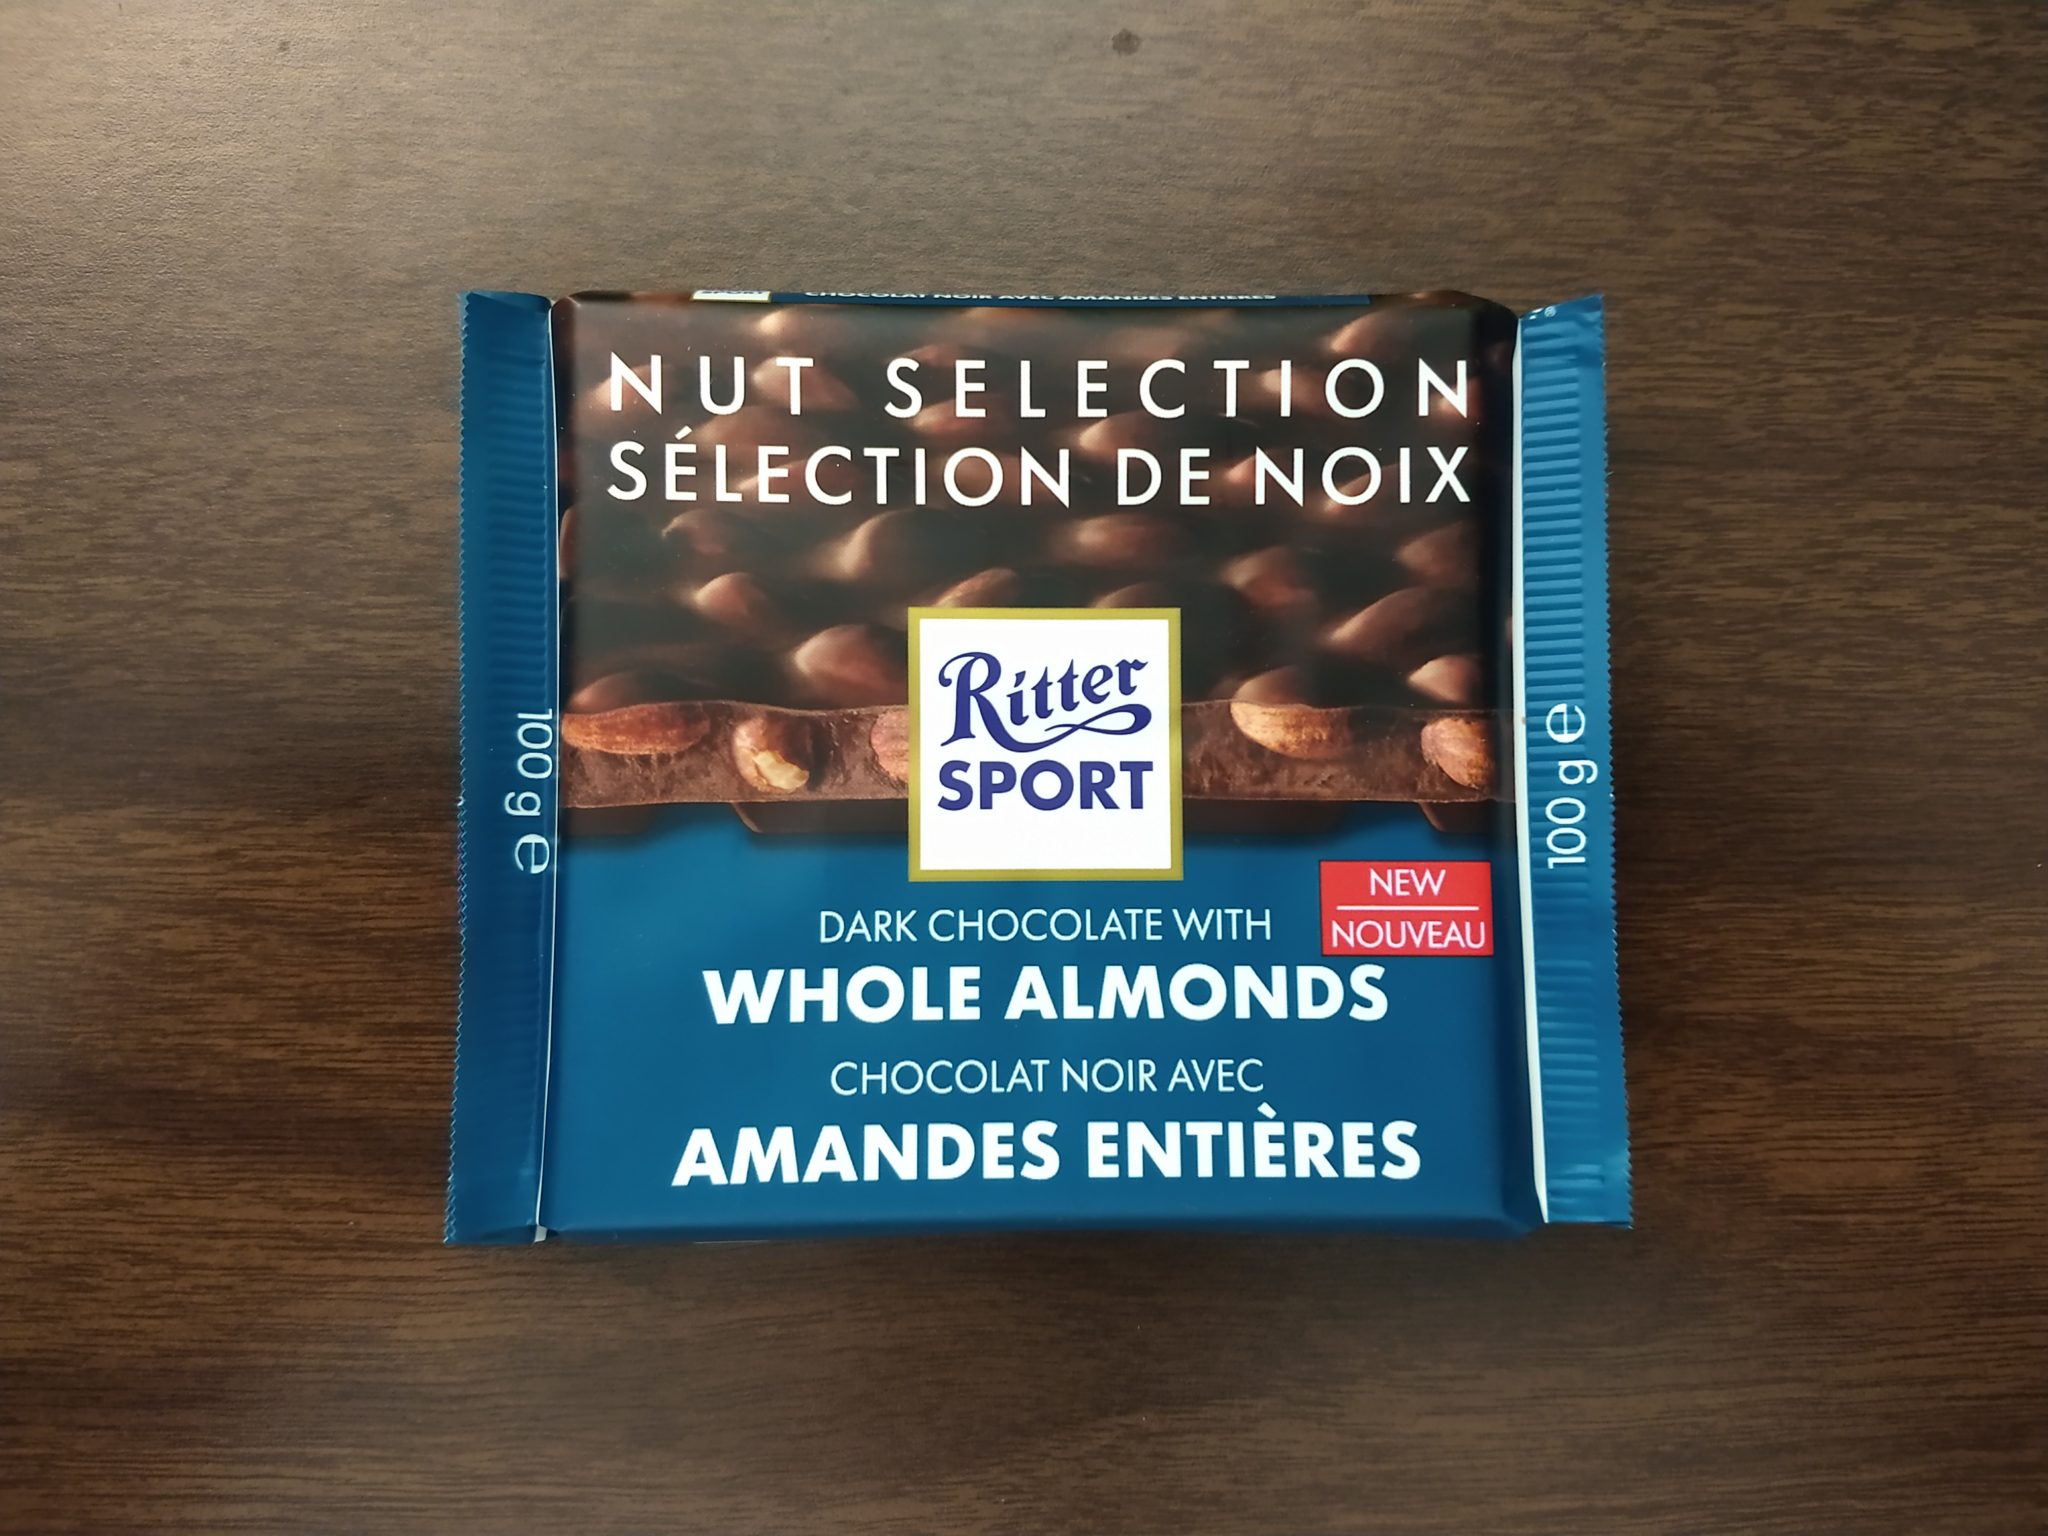 Ritter Sport – Dark Whole Almonds